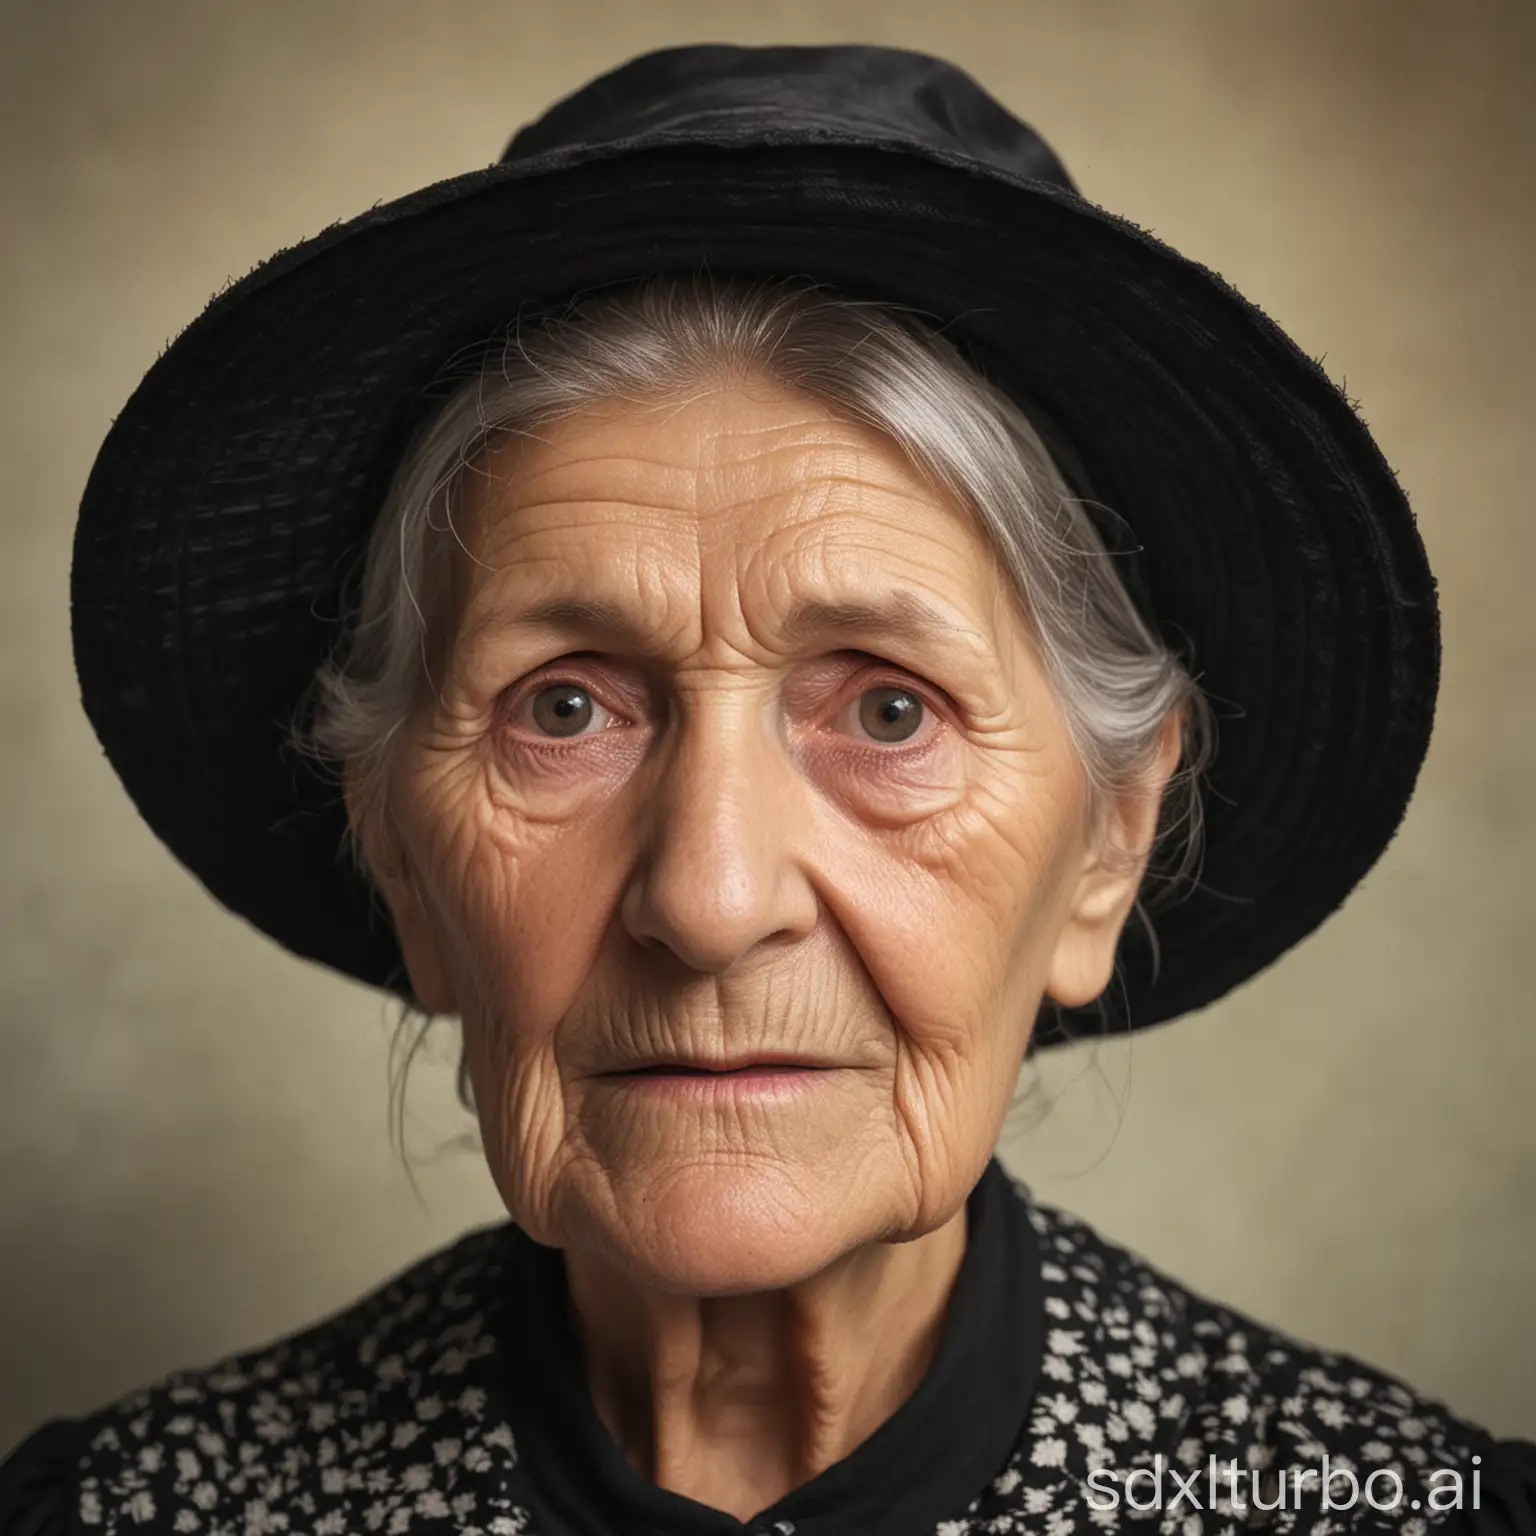 An old woman wearing a black bonnet hat